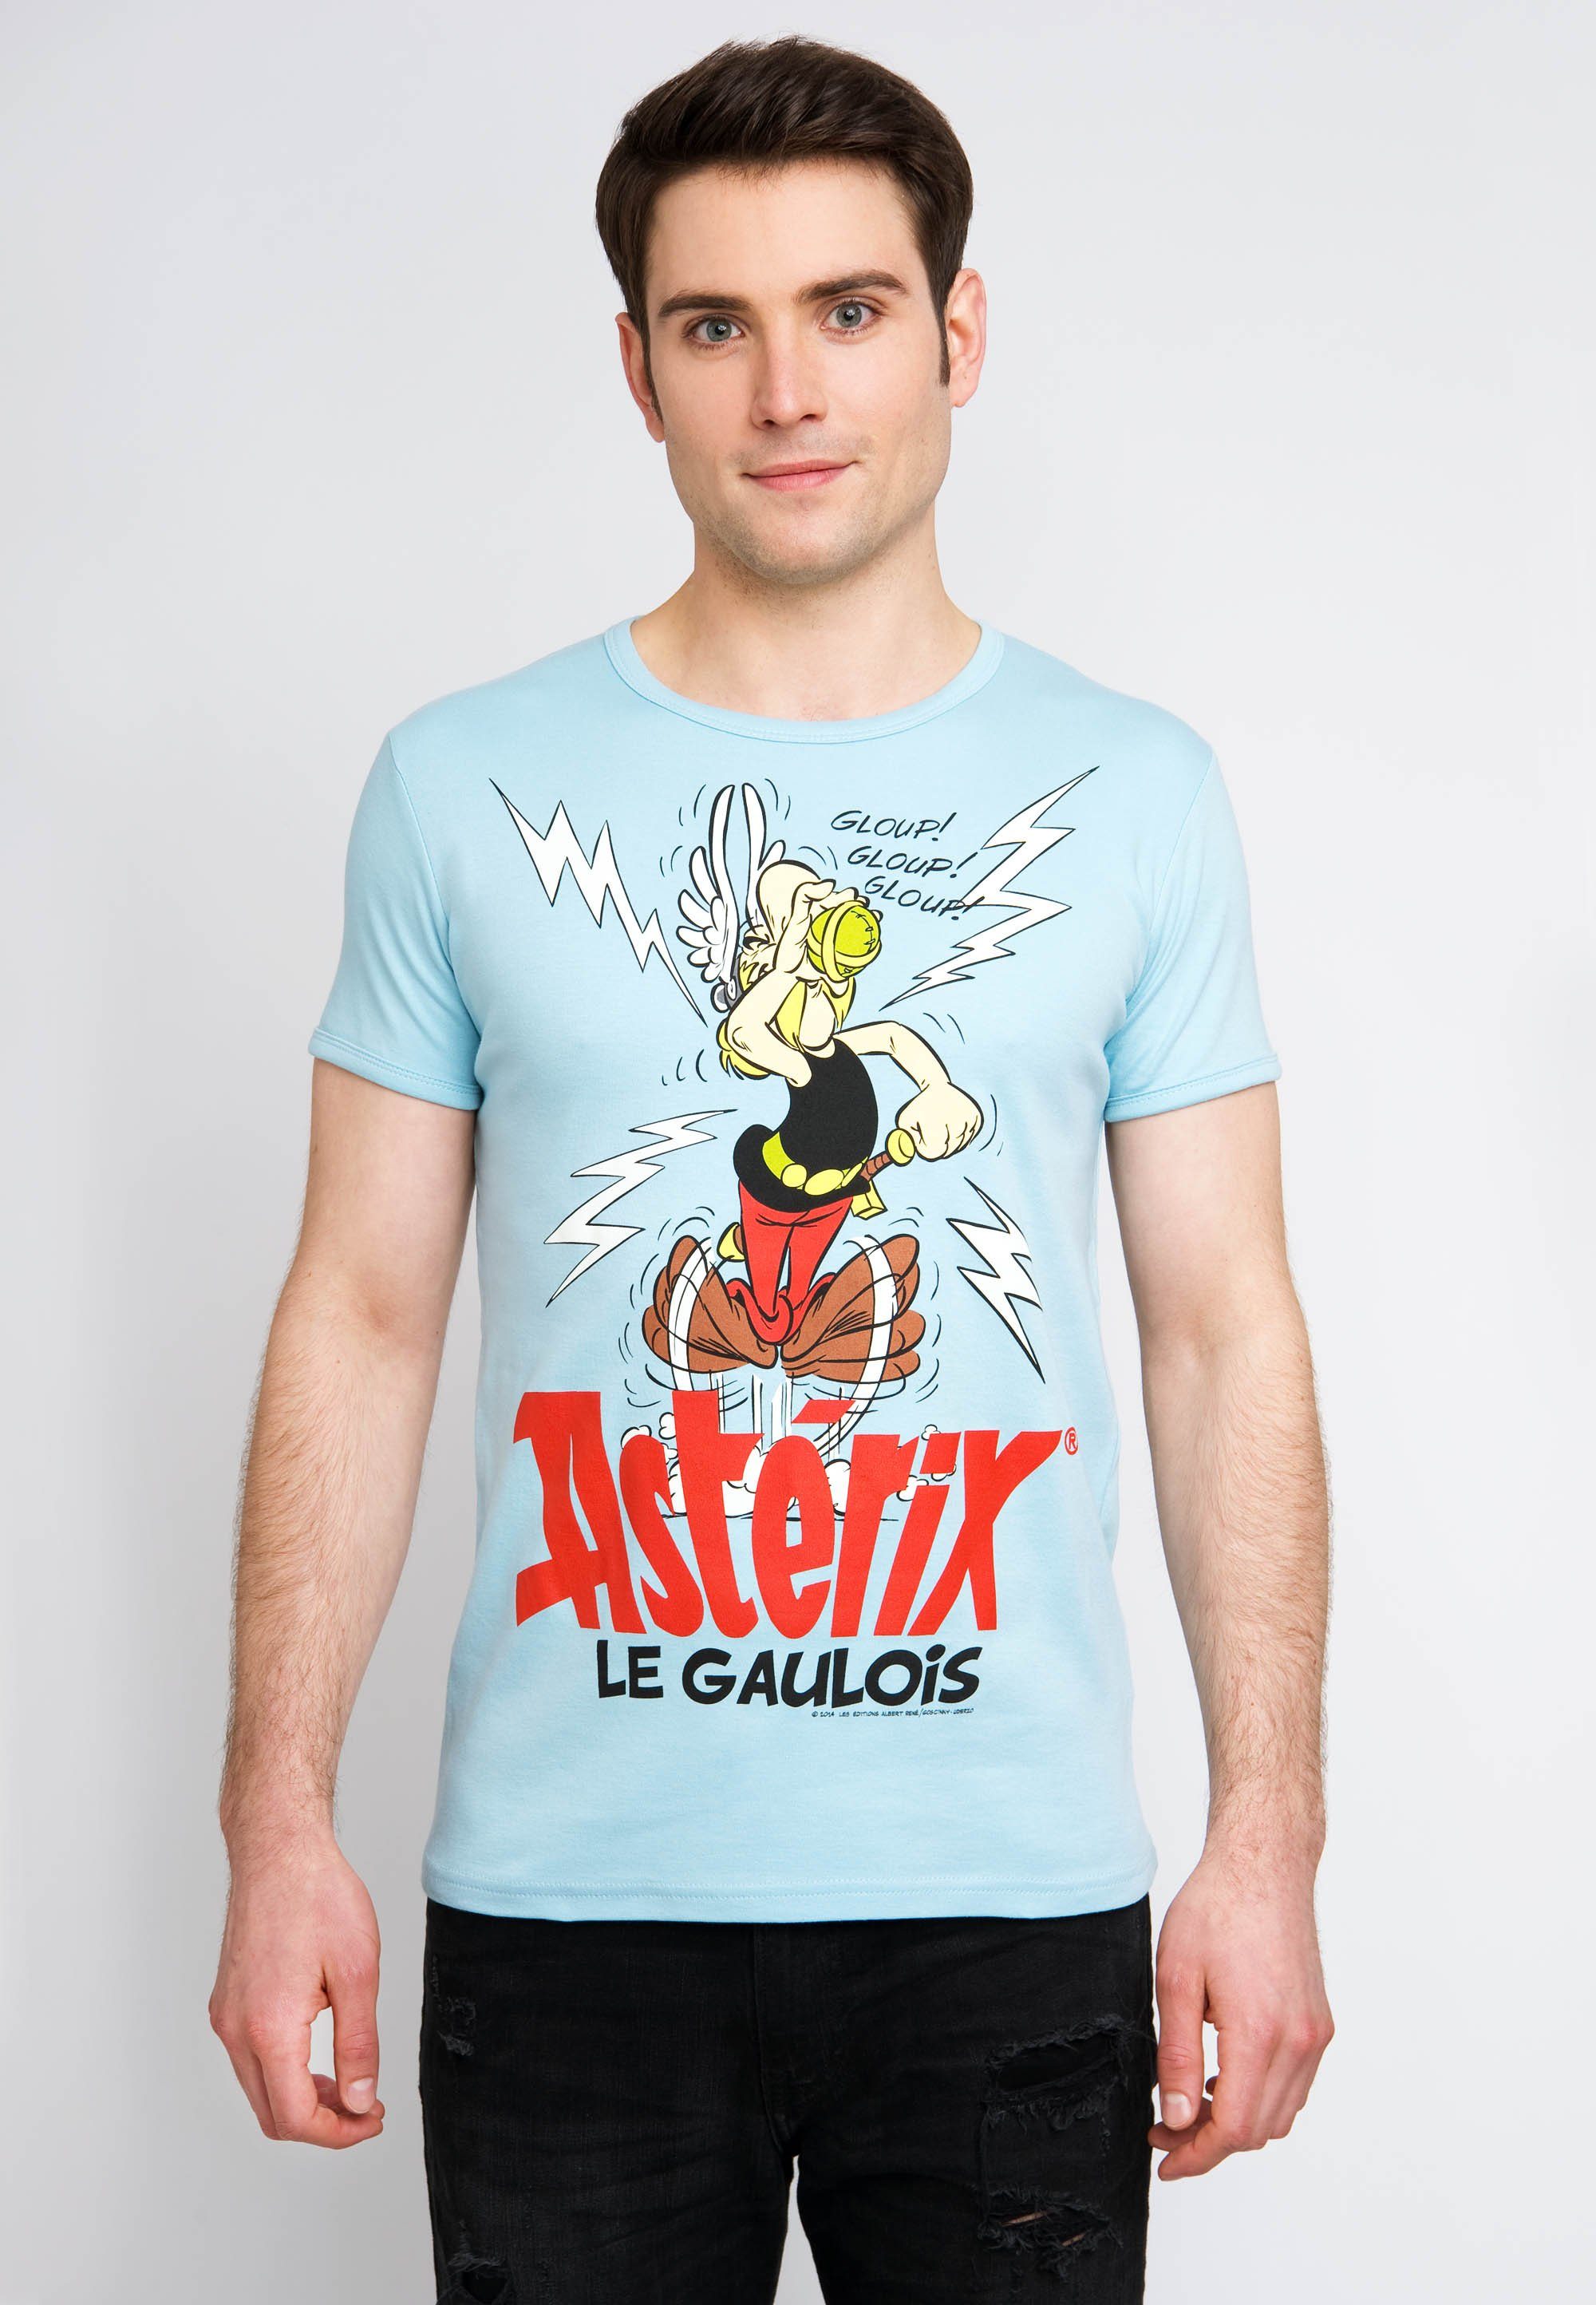 LOGOSHIRT T-Shirt Asterix Le hellblau Zaubertrank-Print mit Gaulois Asterix- und